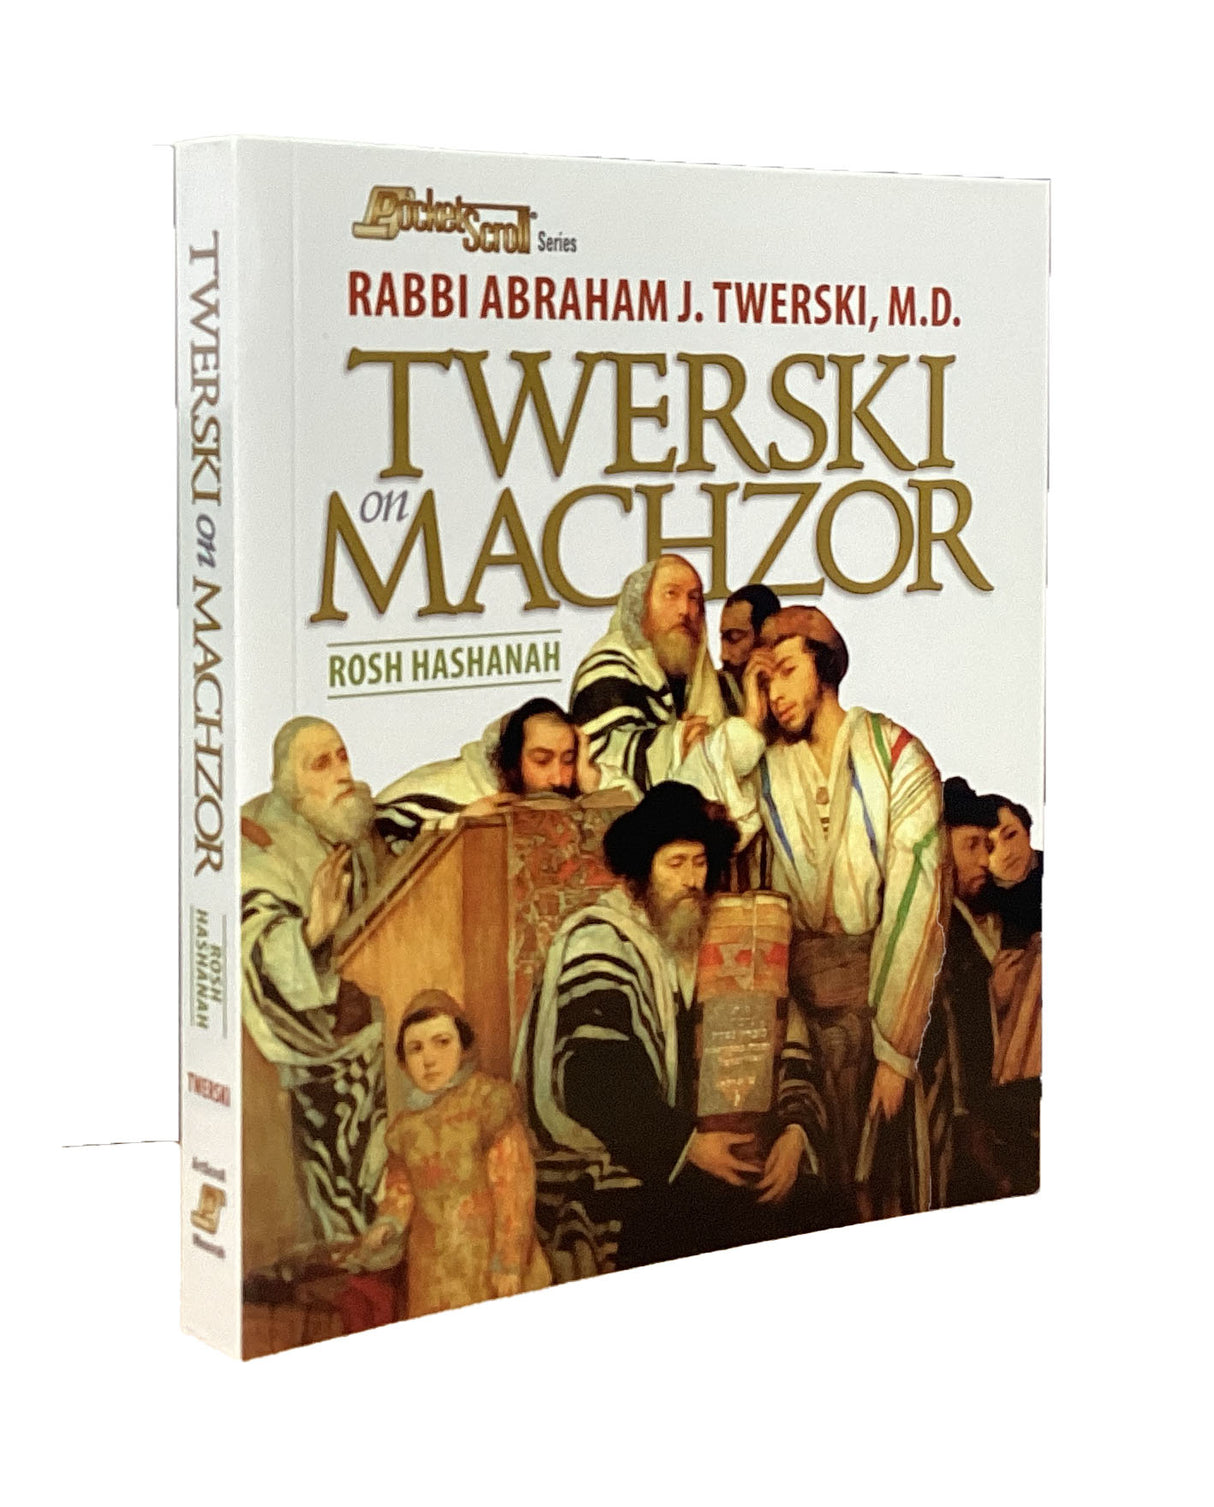 Artscroll: Twerski on Machzor - Rosh Hashanah Paperback by Rabbi Abraham J. Twerski